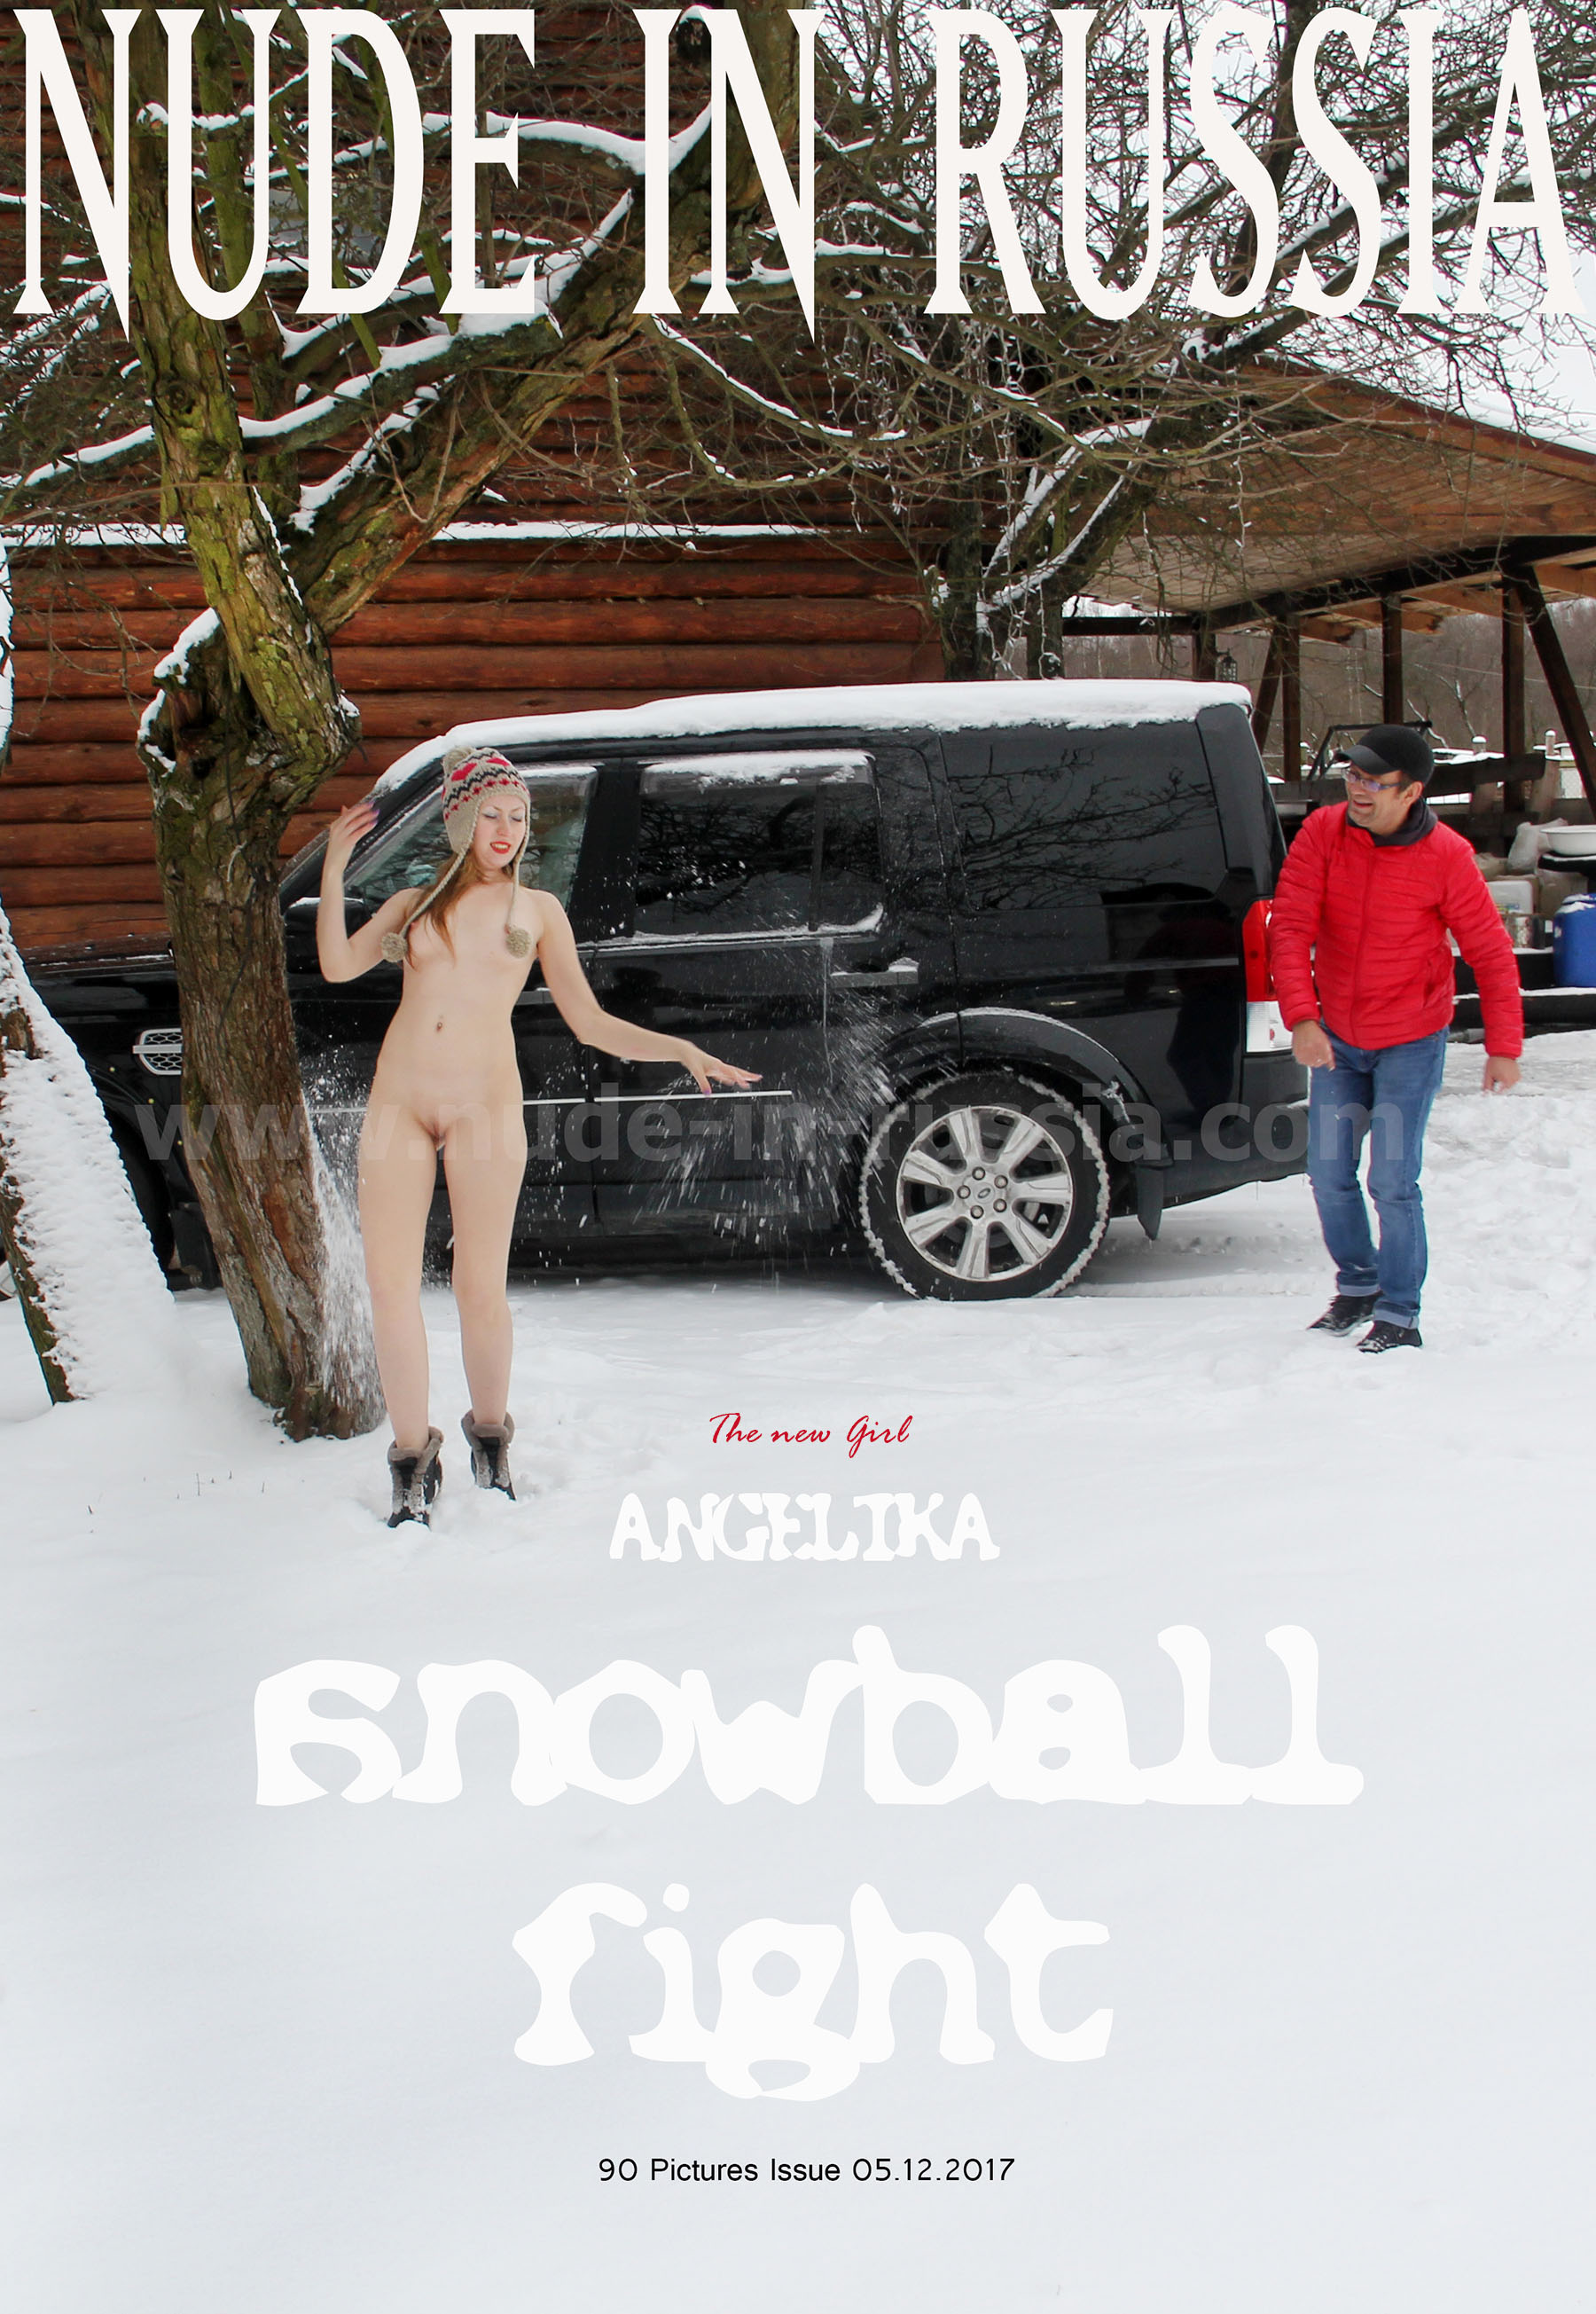 NIR-2017-12-05 - Angelika 2 - New Girl - Snowball fig (1).jpg